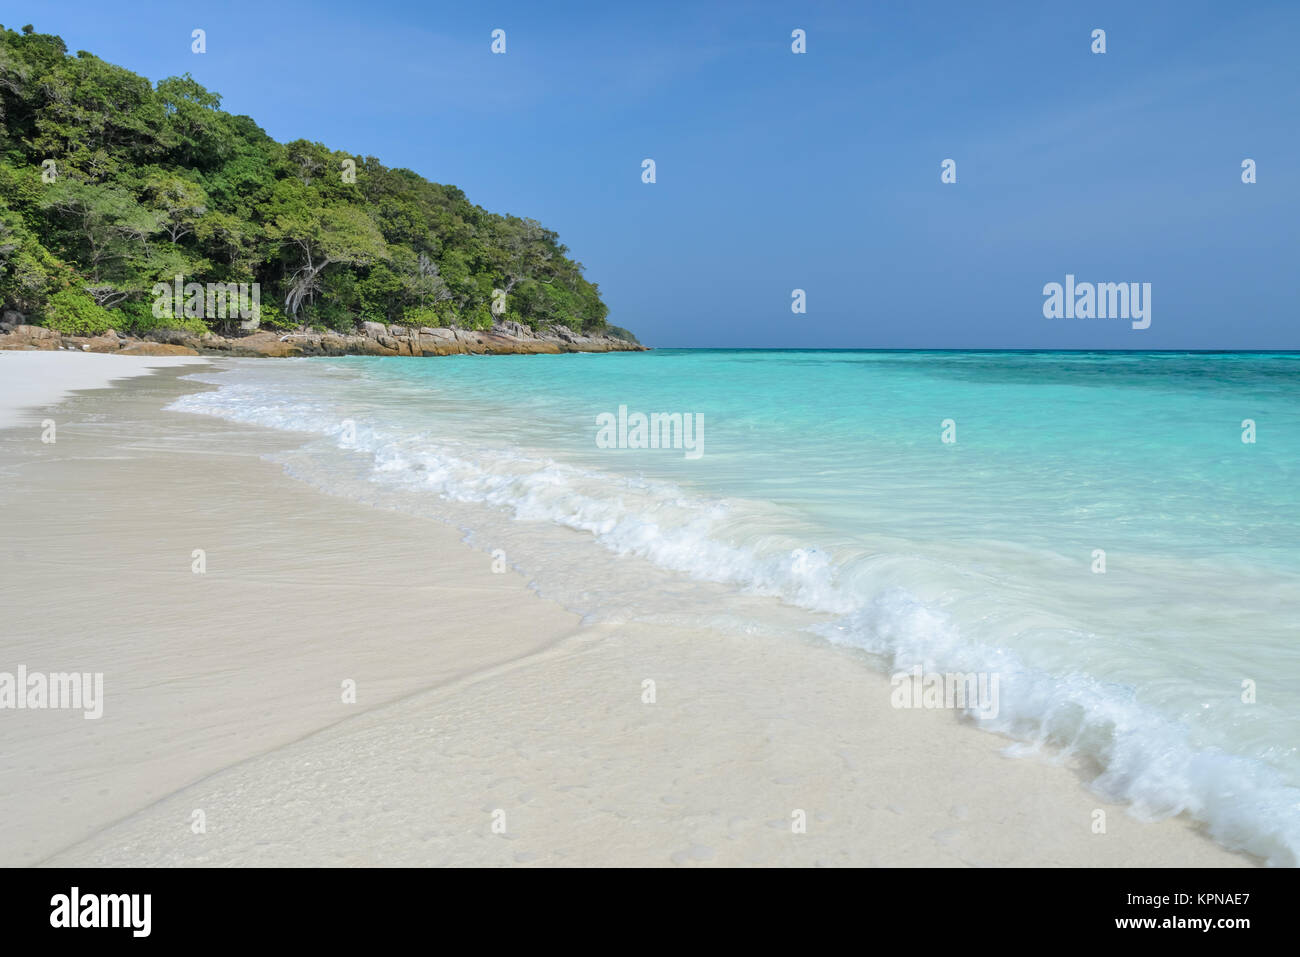 Idyllic white sand beach of Tachai island, Thailand Stock Photo